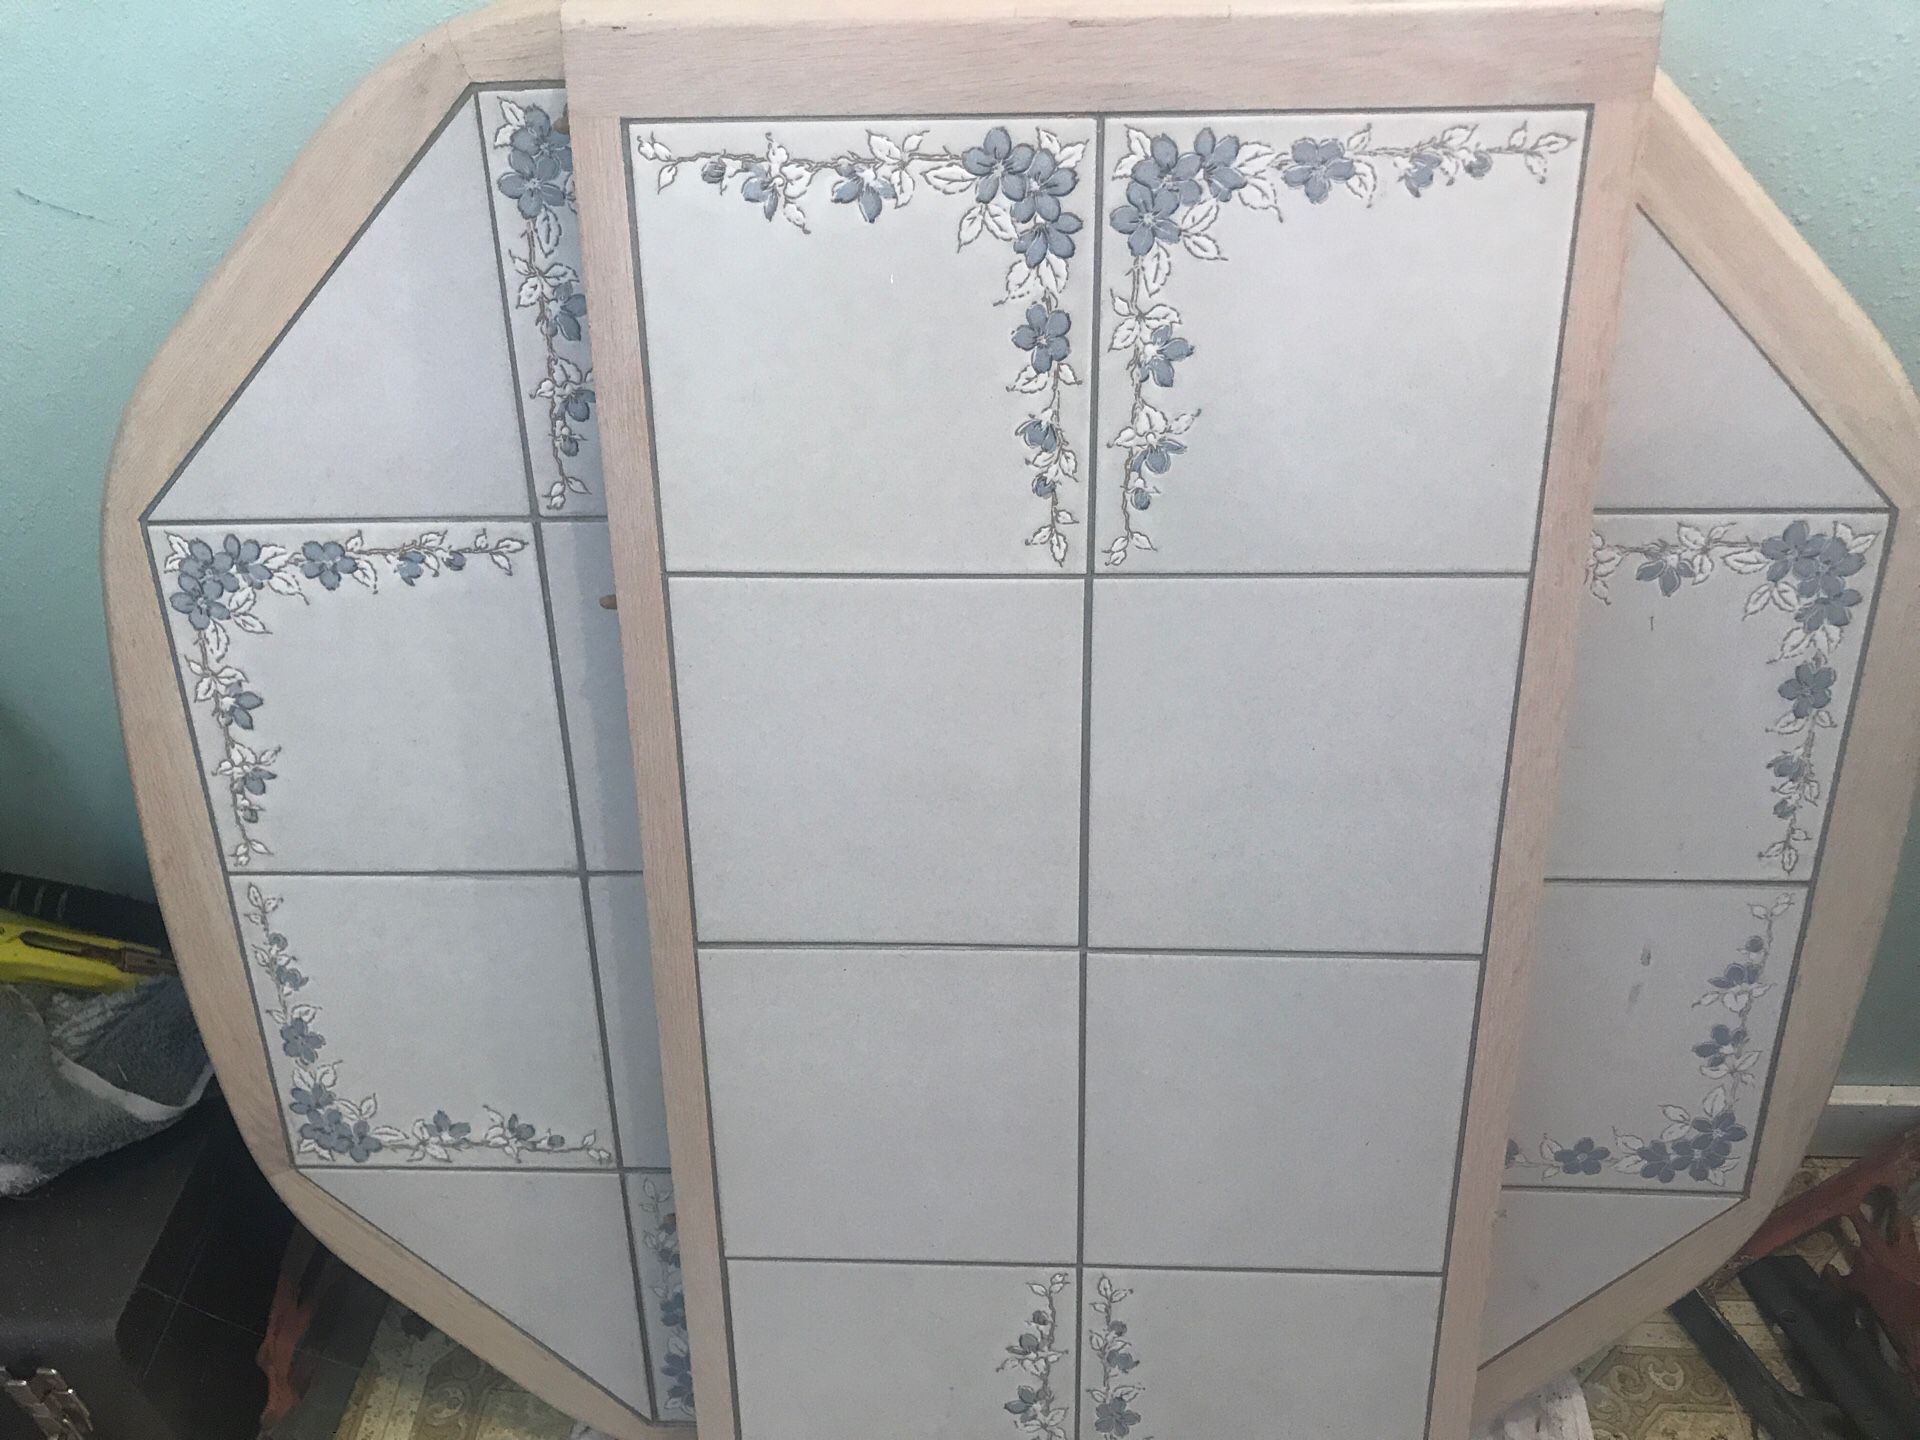 Tile top kitchen table